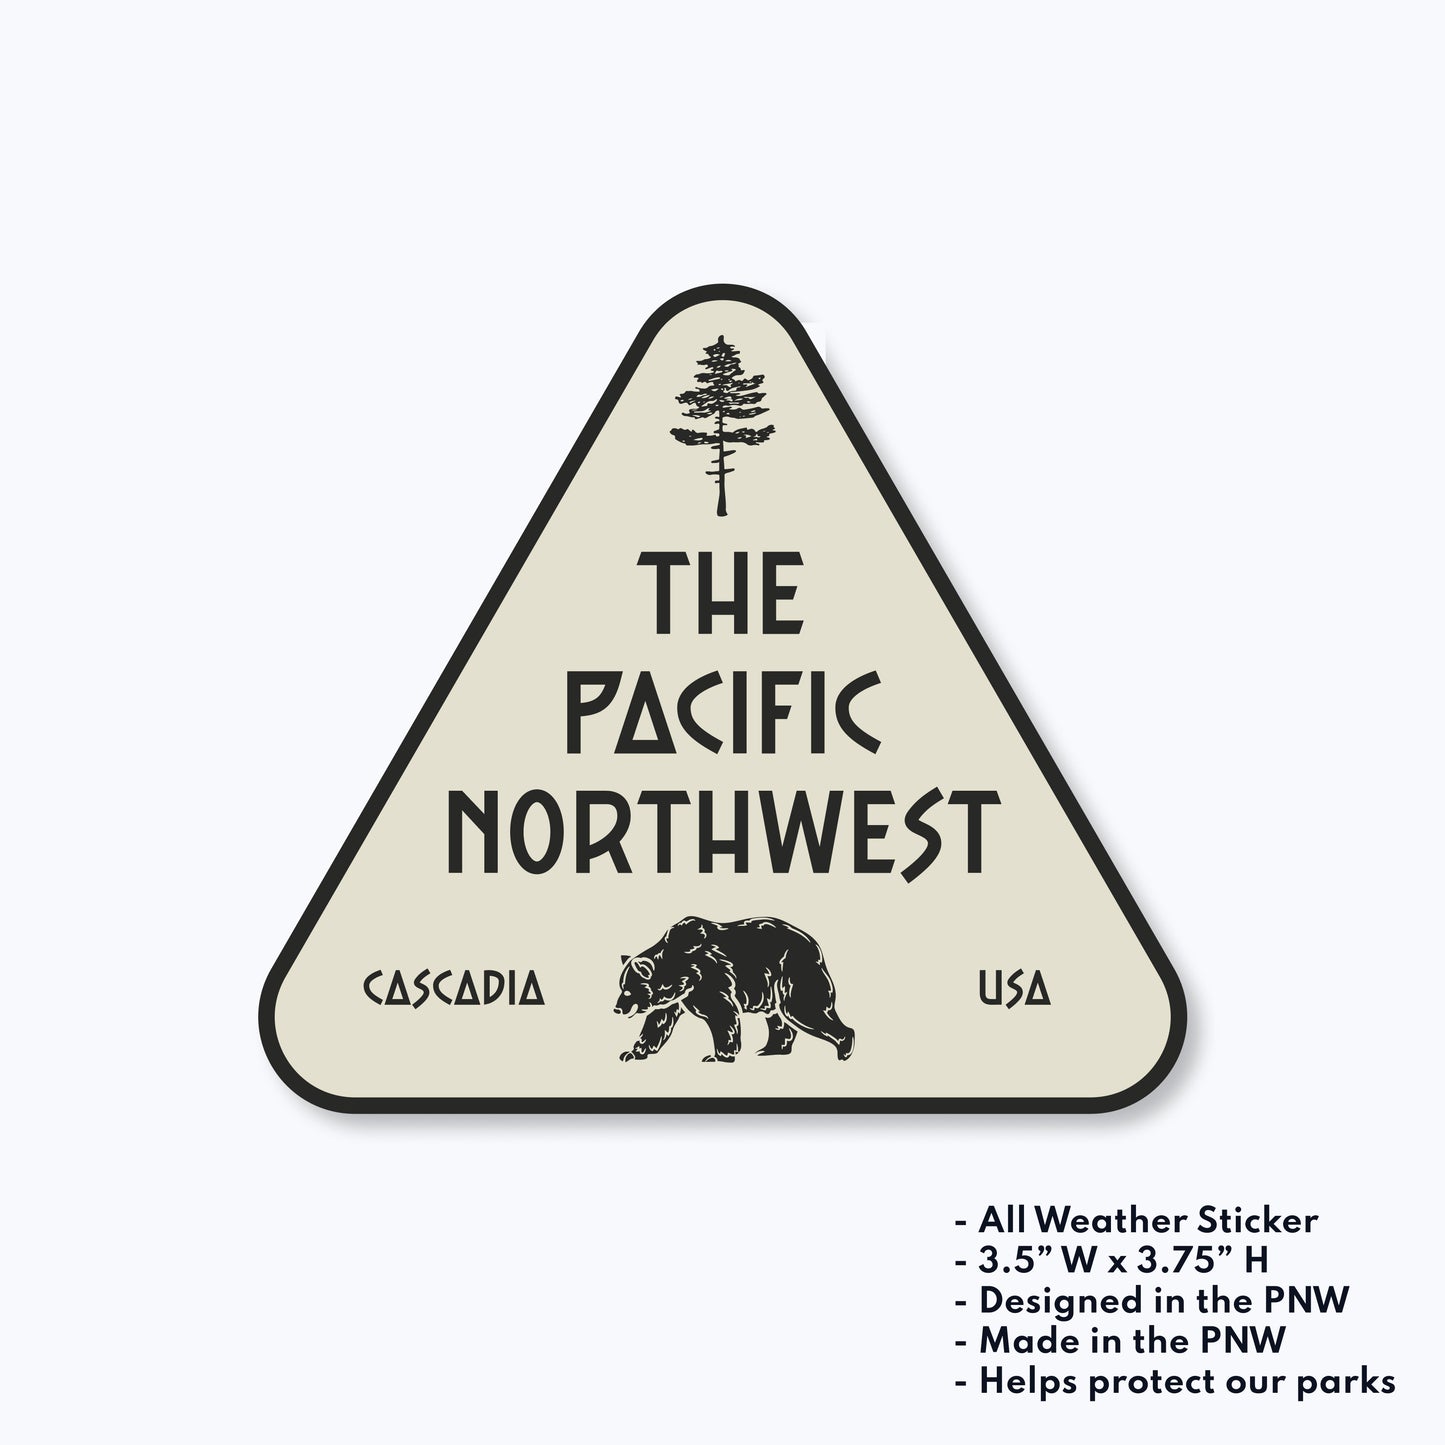 The Pacific Northwest Cascadia Sticker